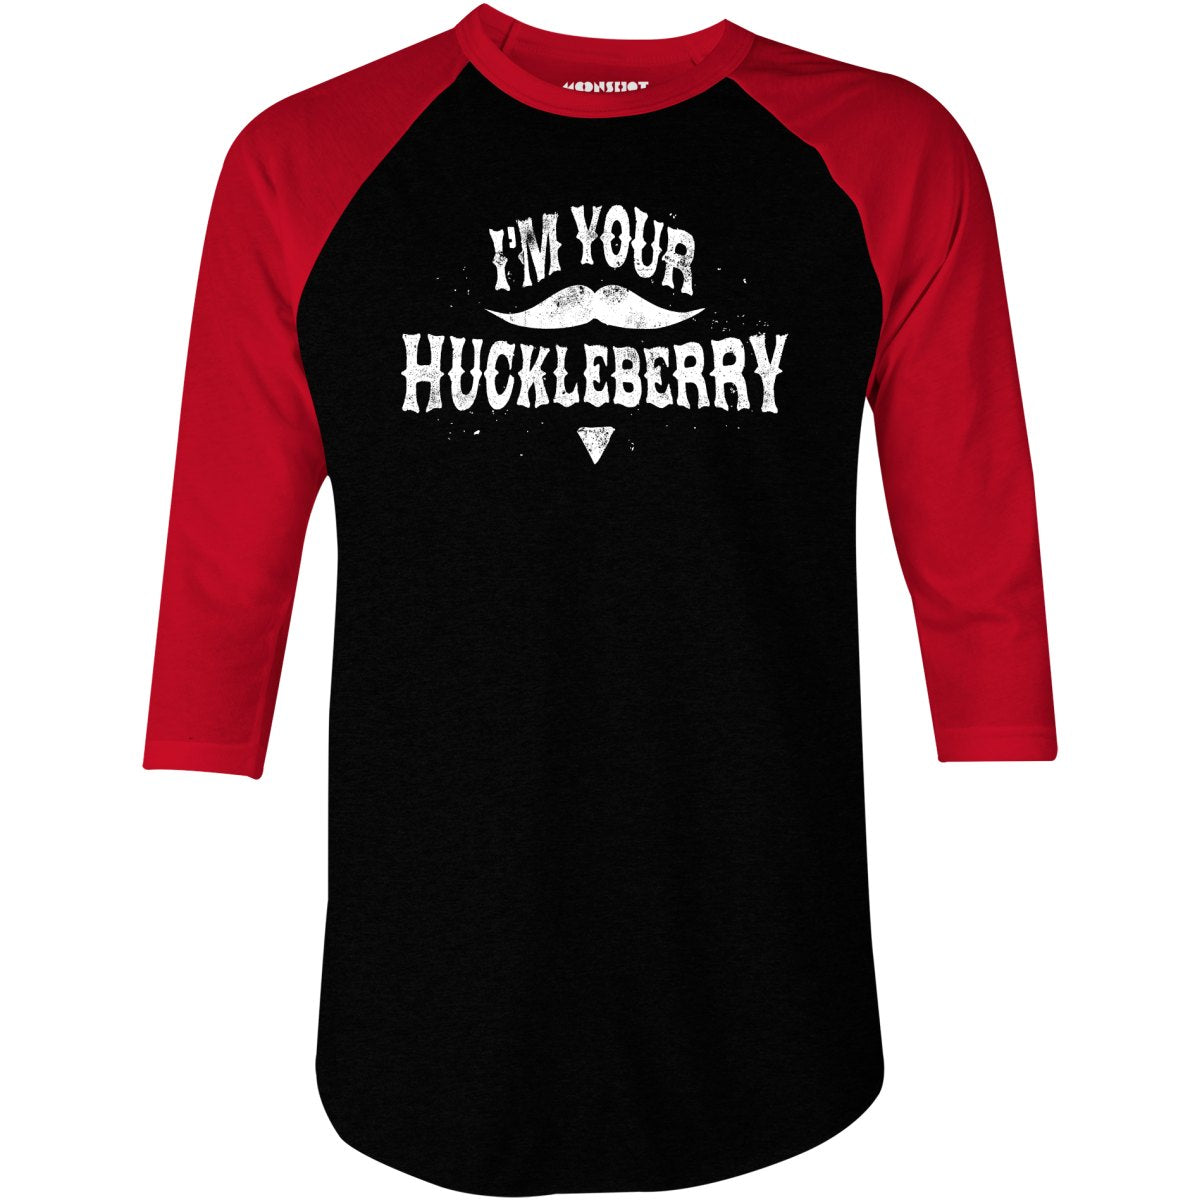 I'm Your Huckleberry - 3/4 Sleeve Raglan T-Shirt